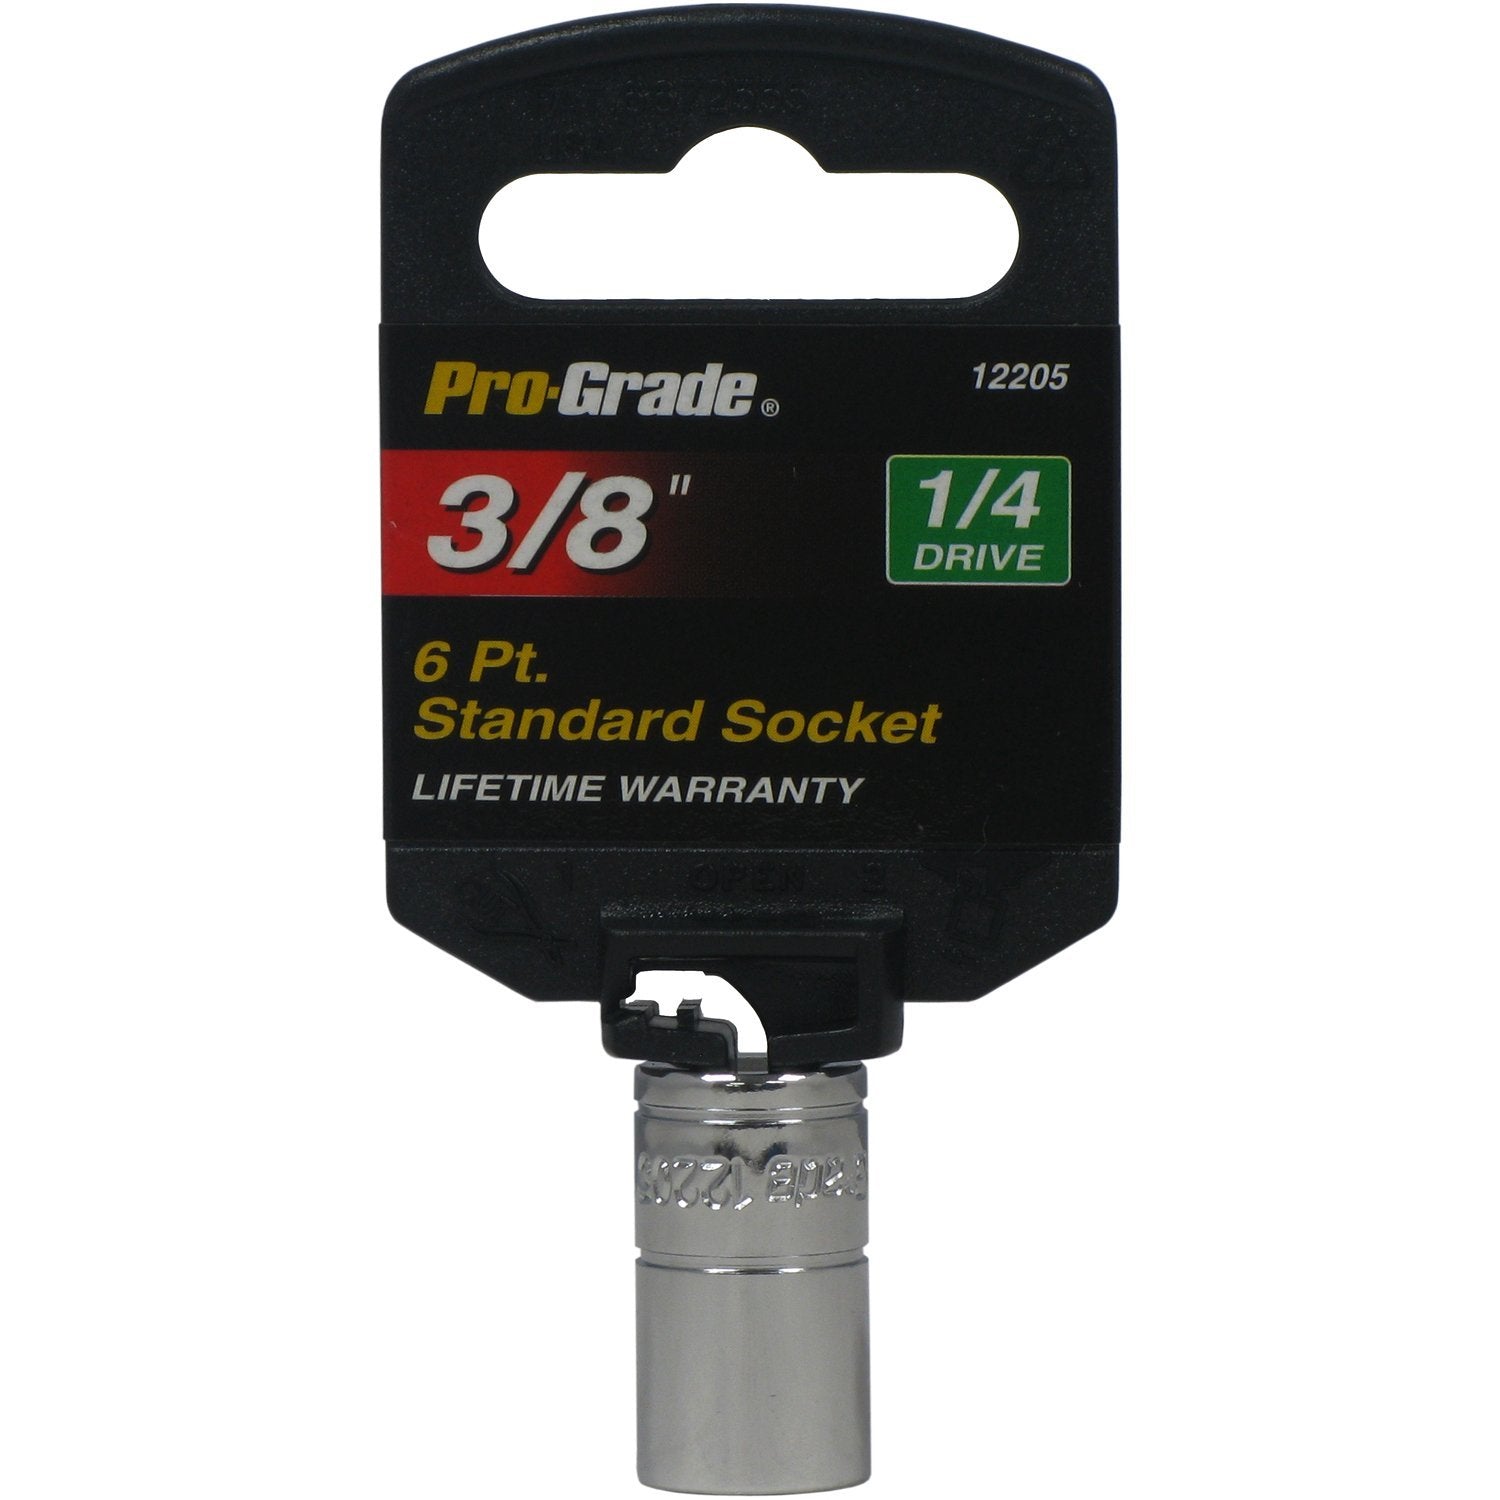 Pro Grade 1/4" Drive 3/8" Standard Socket 6 Point Chrome Vanadium Steel 12205